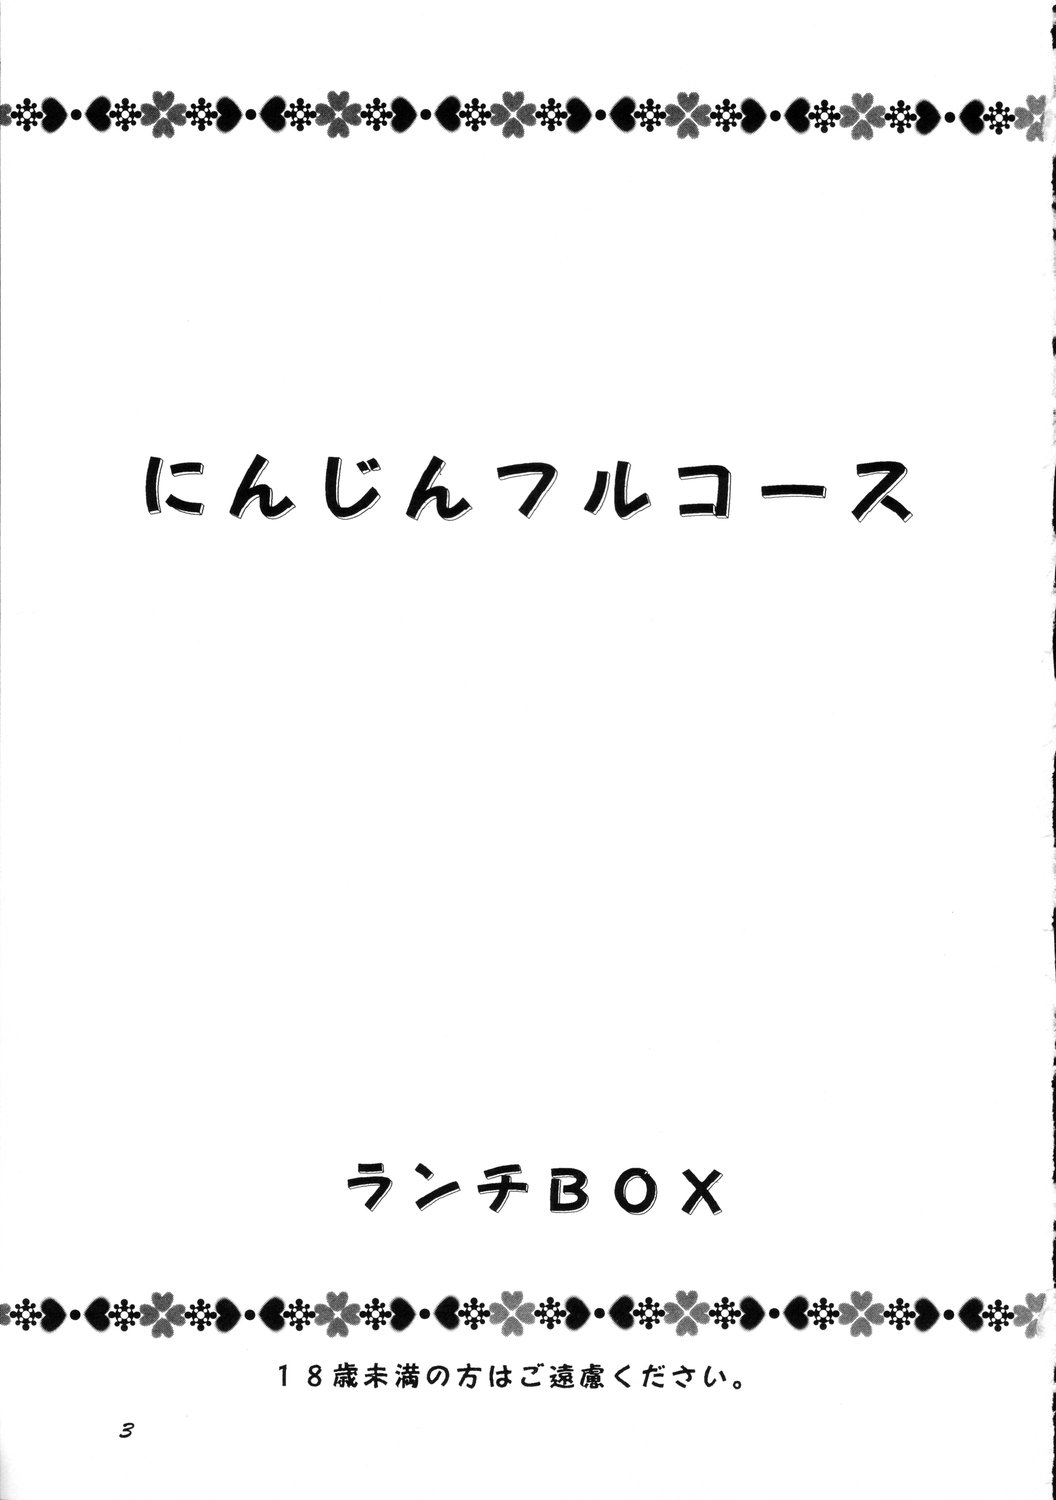 Lunch Box 36 - Ninjin Furukosu (Lunch Box) にんじんフルコース